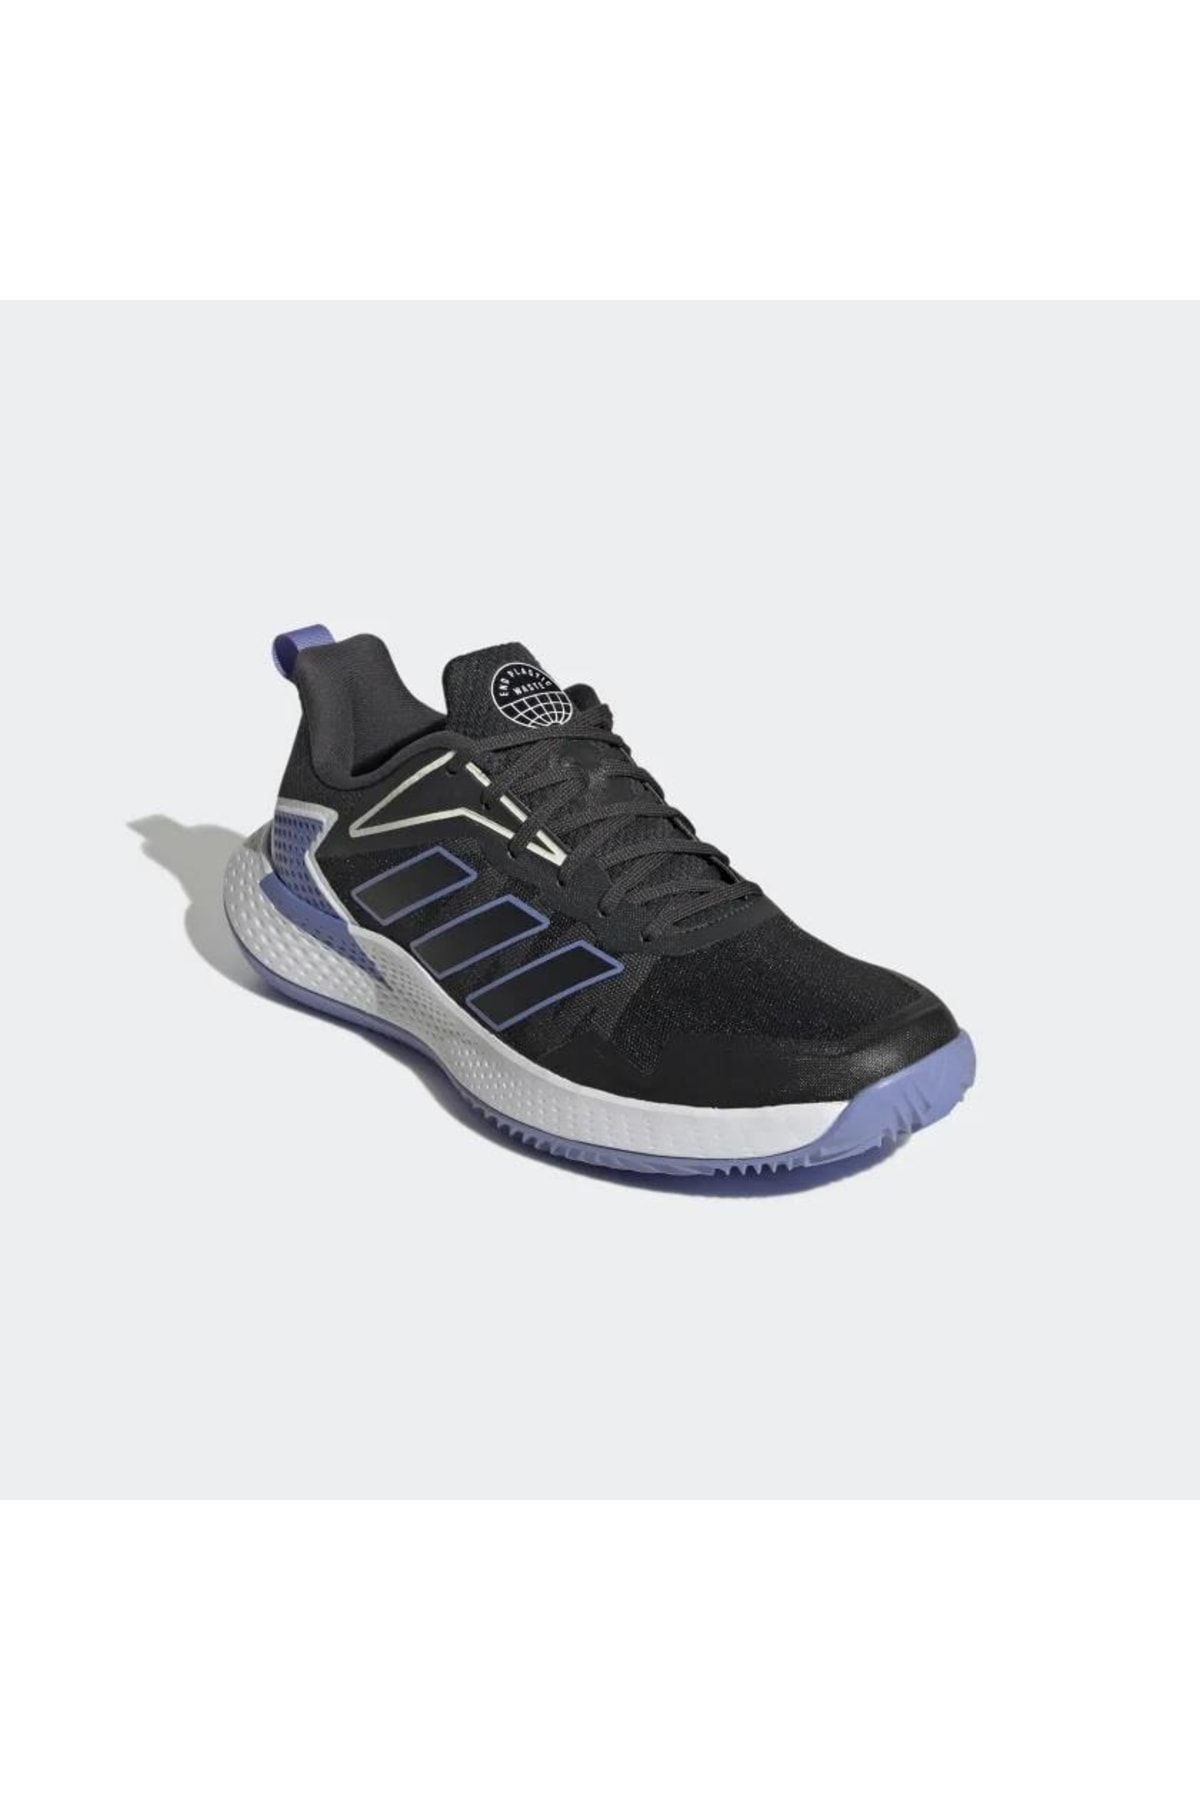 adidas Gx7135 Defiant Speed Toprak Siyah Kadın Tenis Ayakkabısı